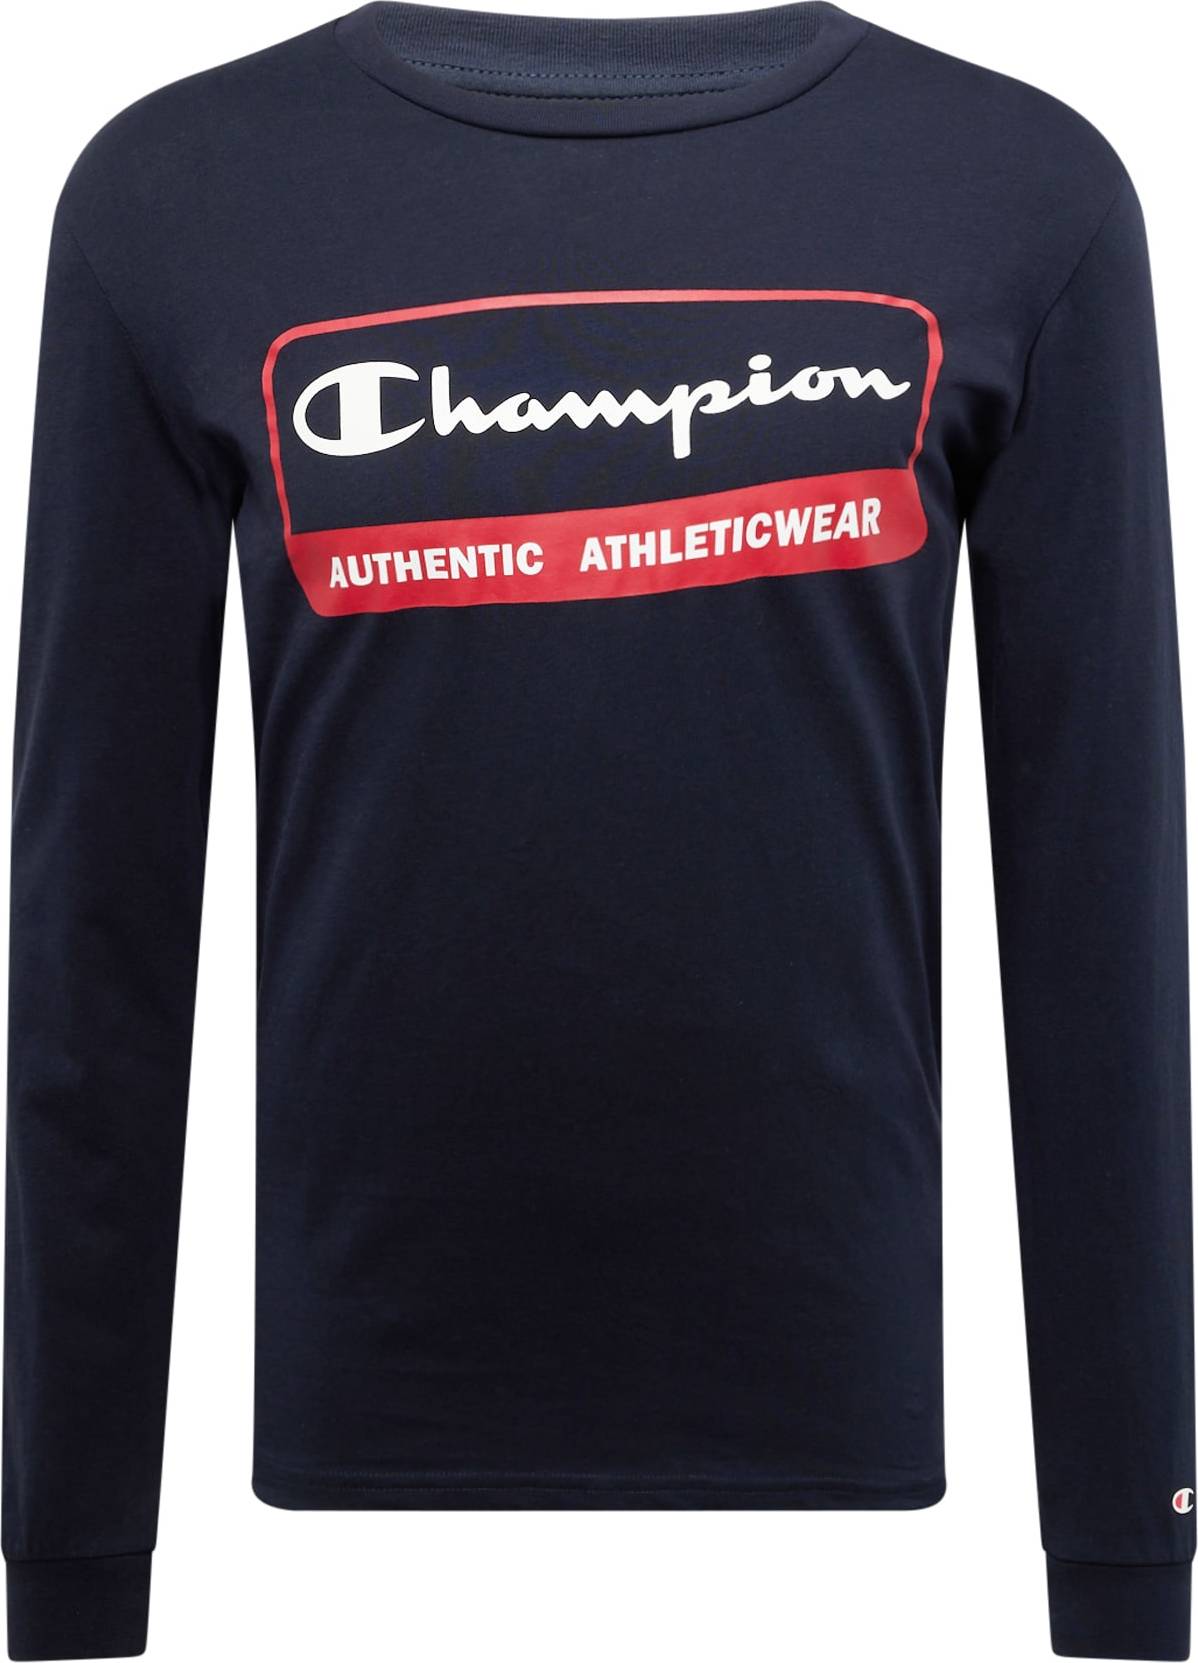 Tričko Champion Authentic Athletic Apparel námořnická modř / grenadina / bílá